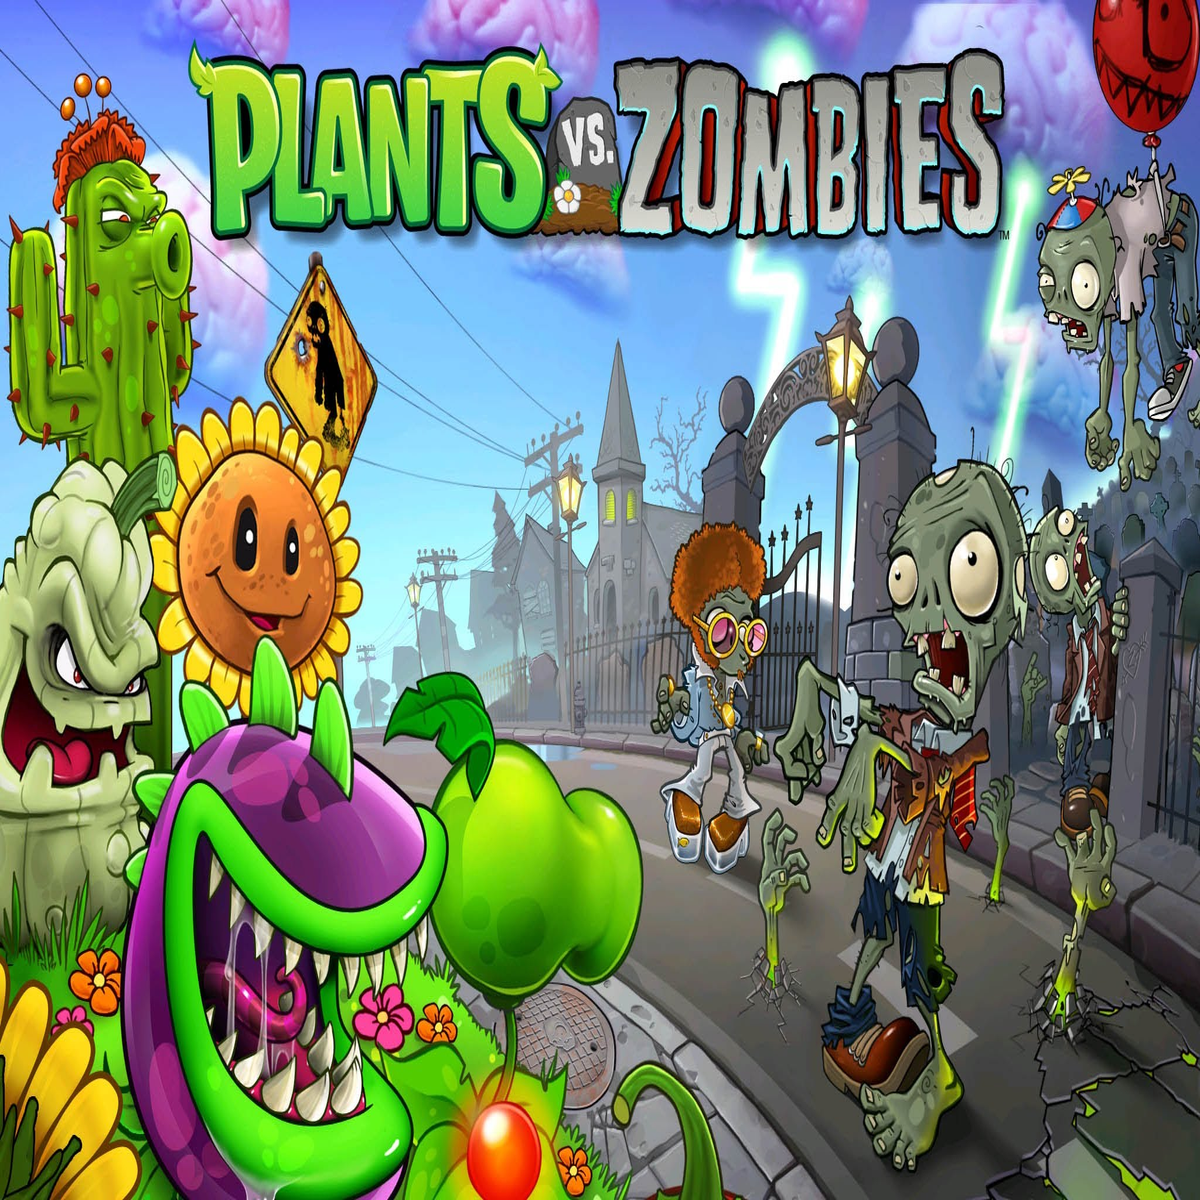 plants vs zombies windows pc / Download I send now..